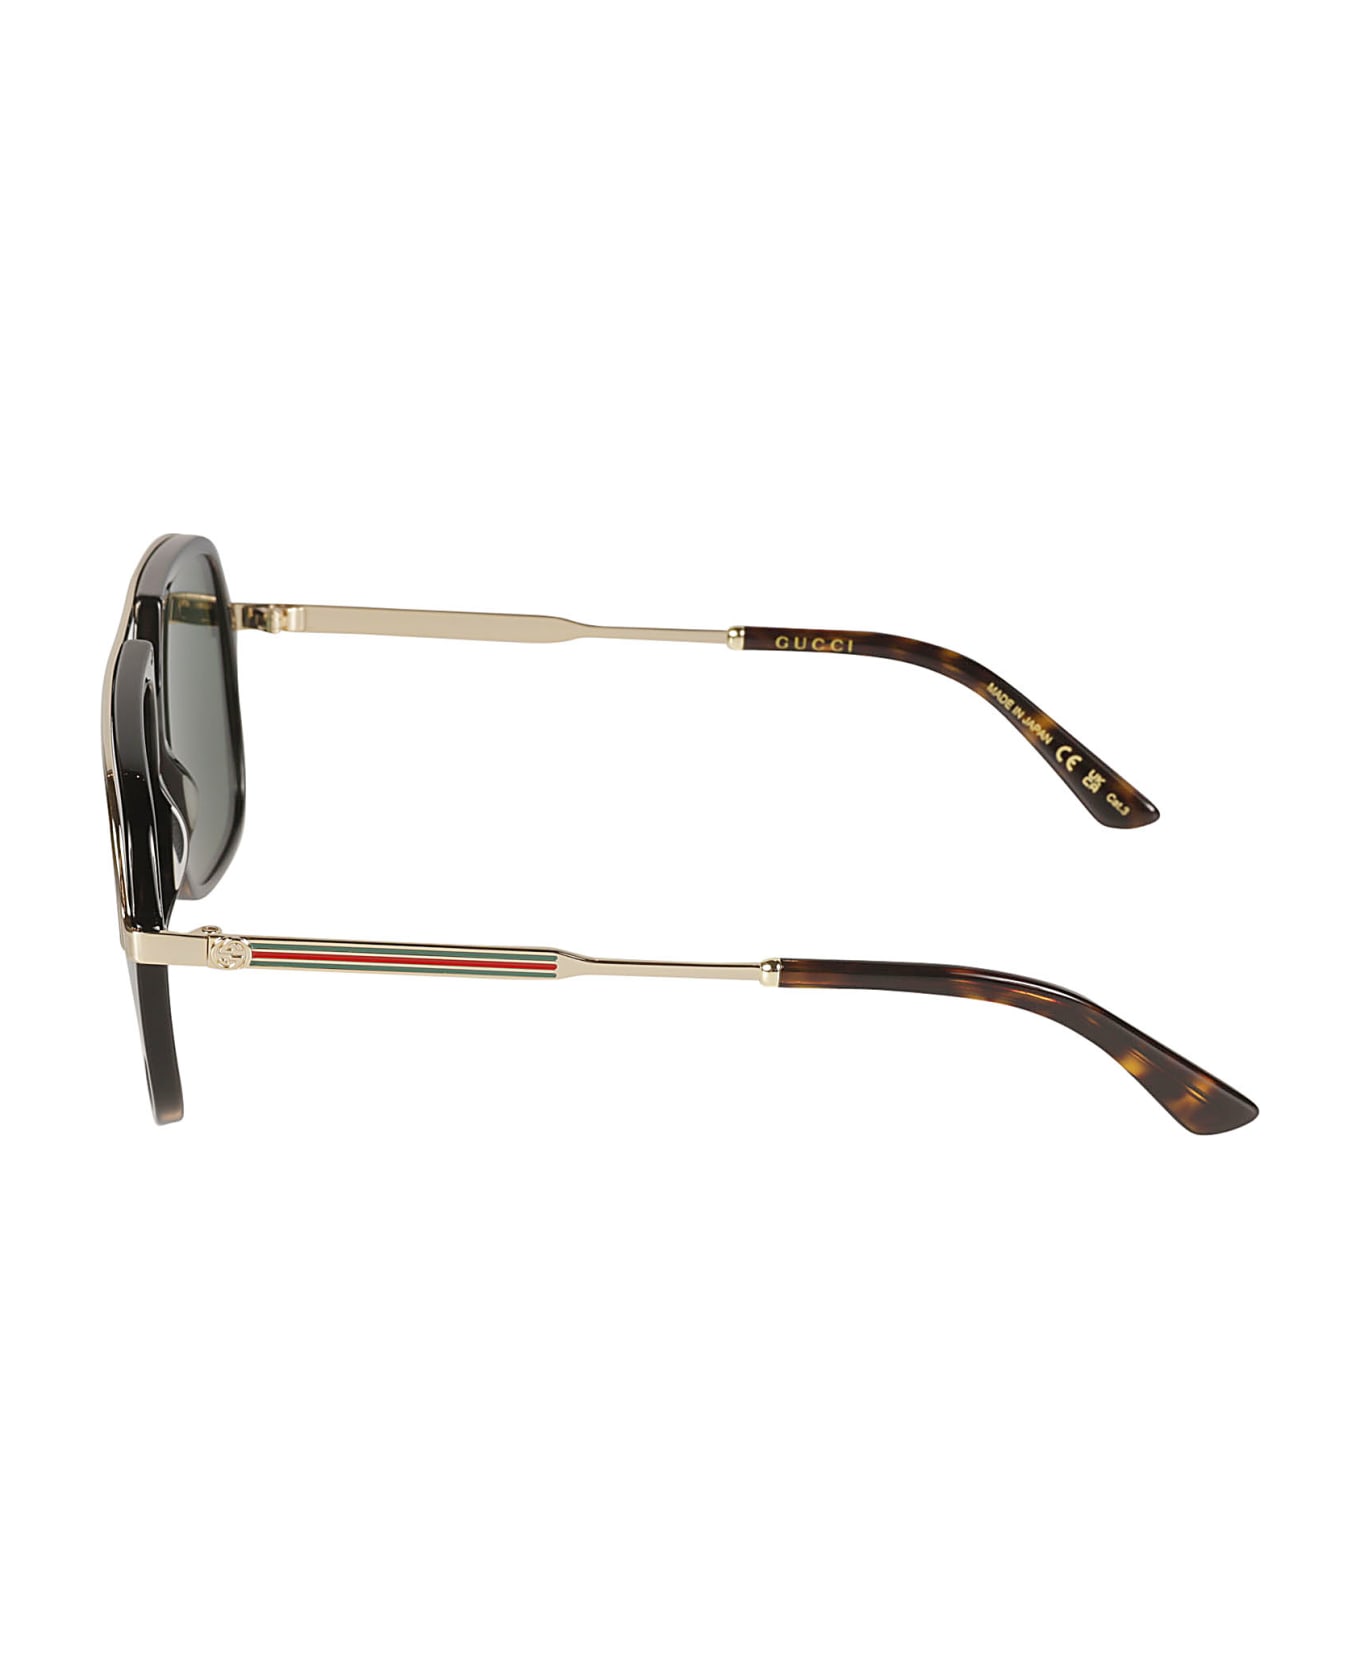 Gucci Eyewear Logo Aviator Sunglasses - Black/Gold